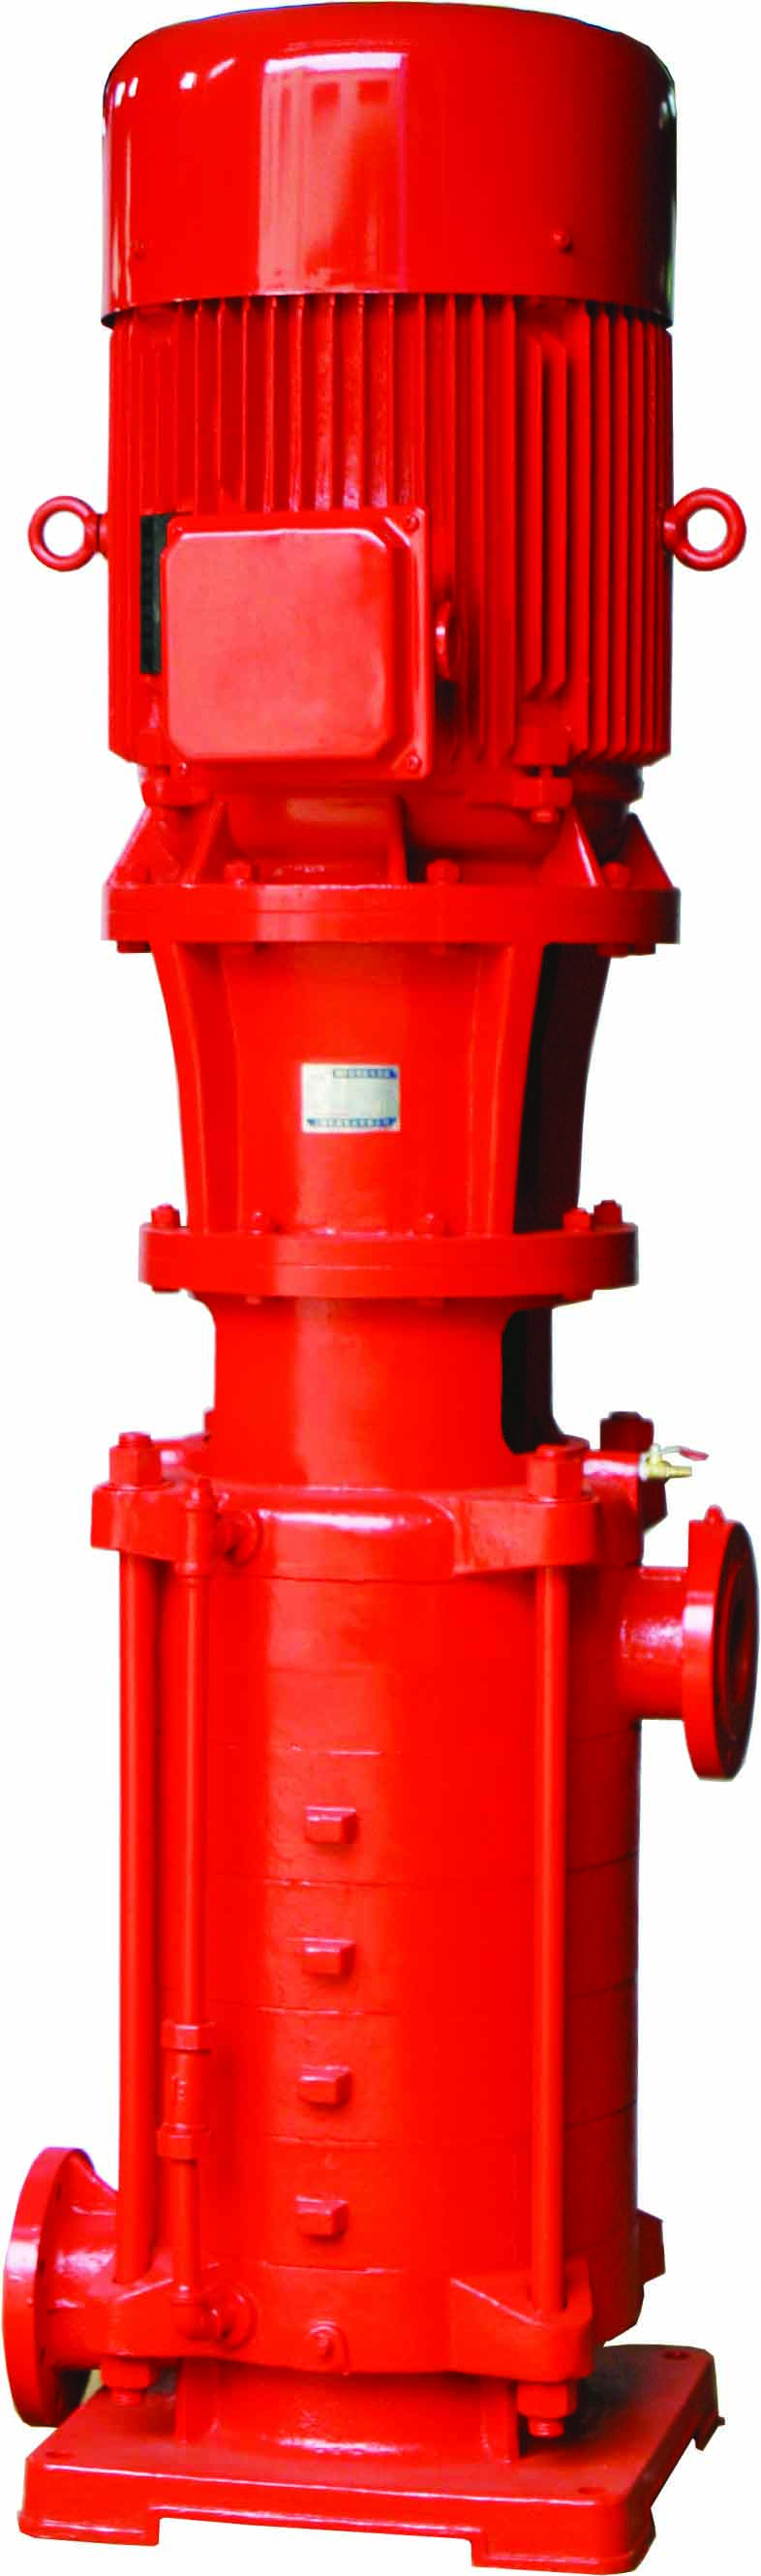 XBD-DL Vertikal Single-Suction Multistage Centrifugal Fire Pump dalam Sistem Pemadam Kebakaran